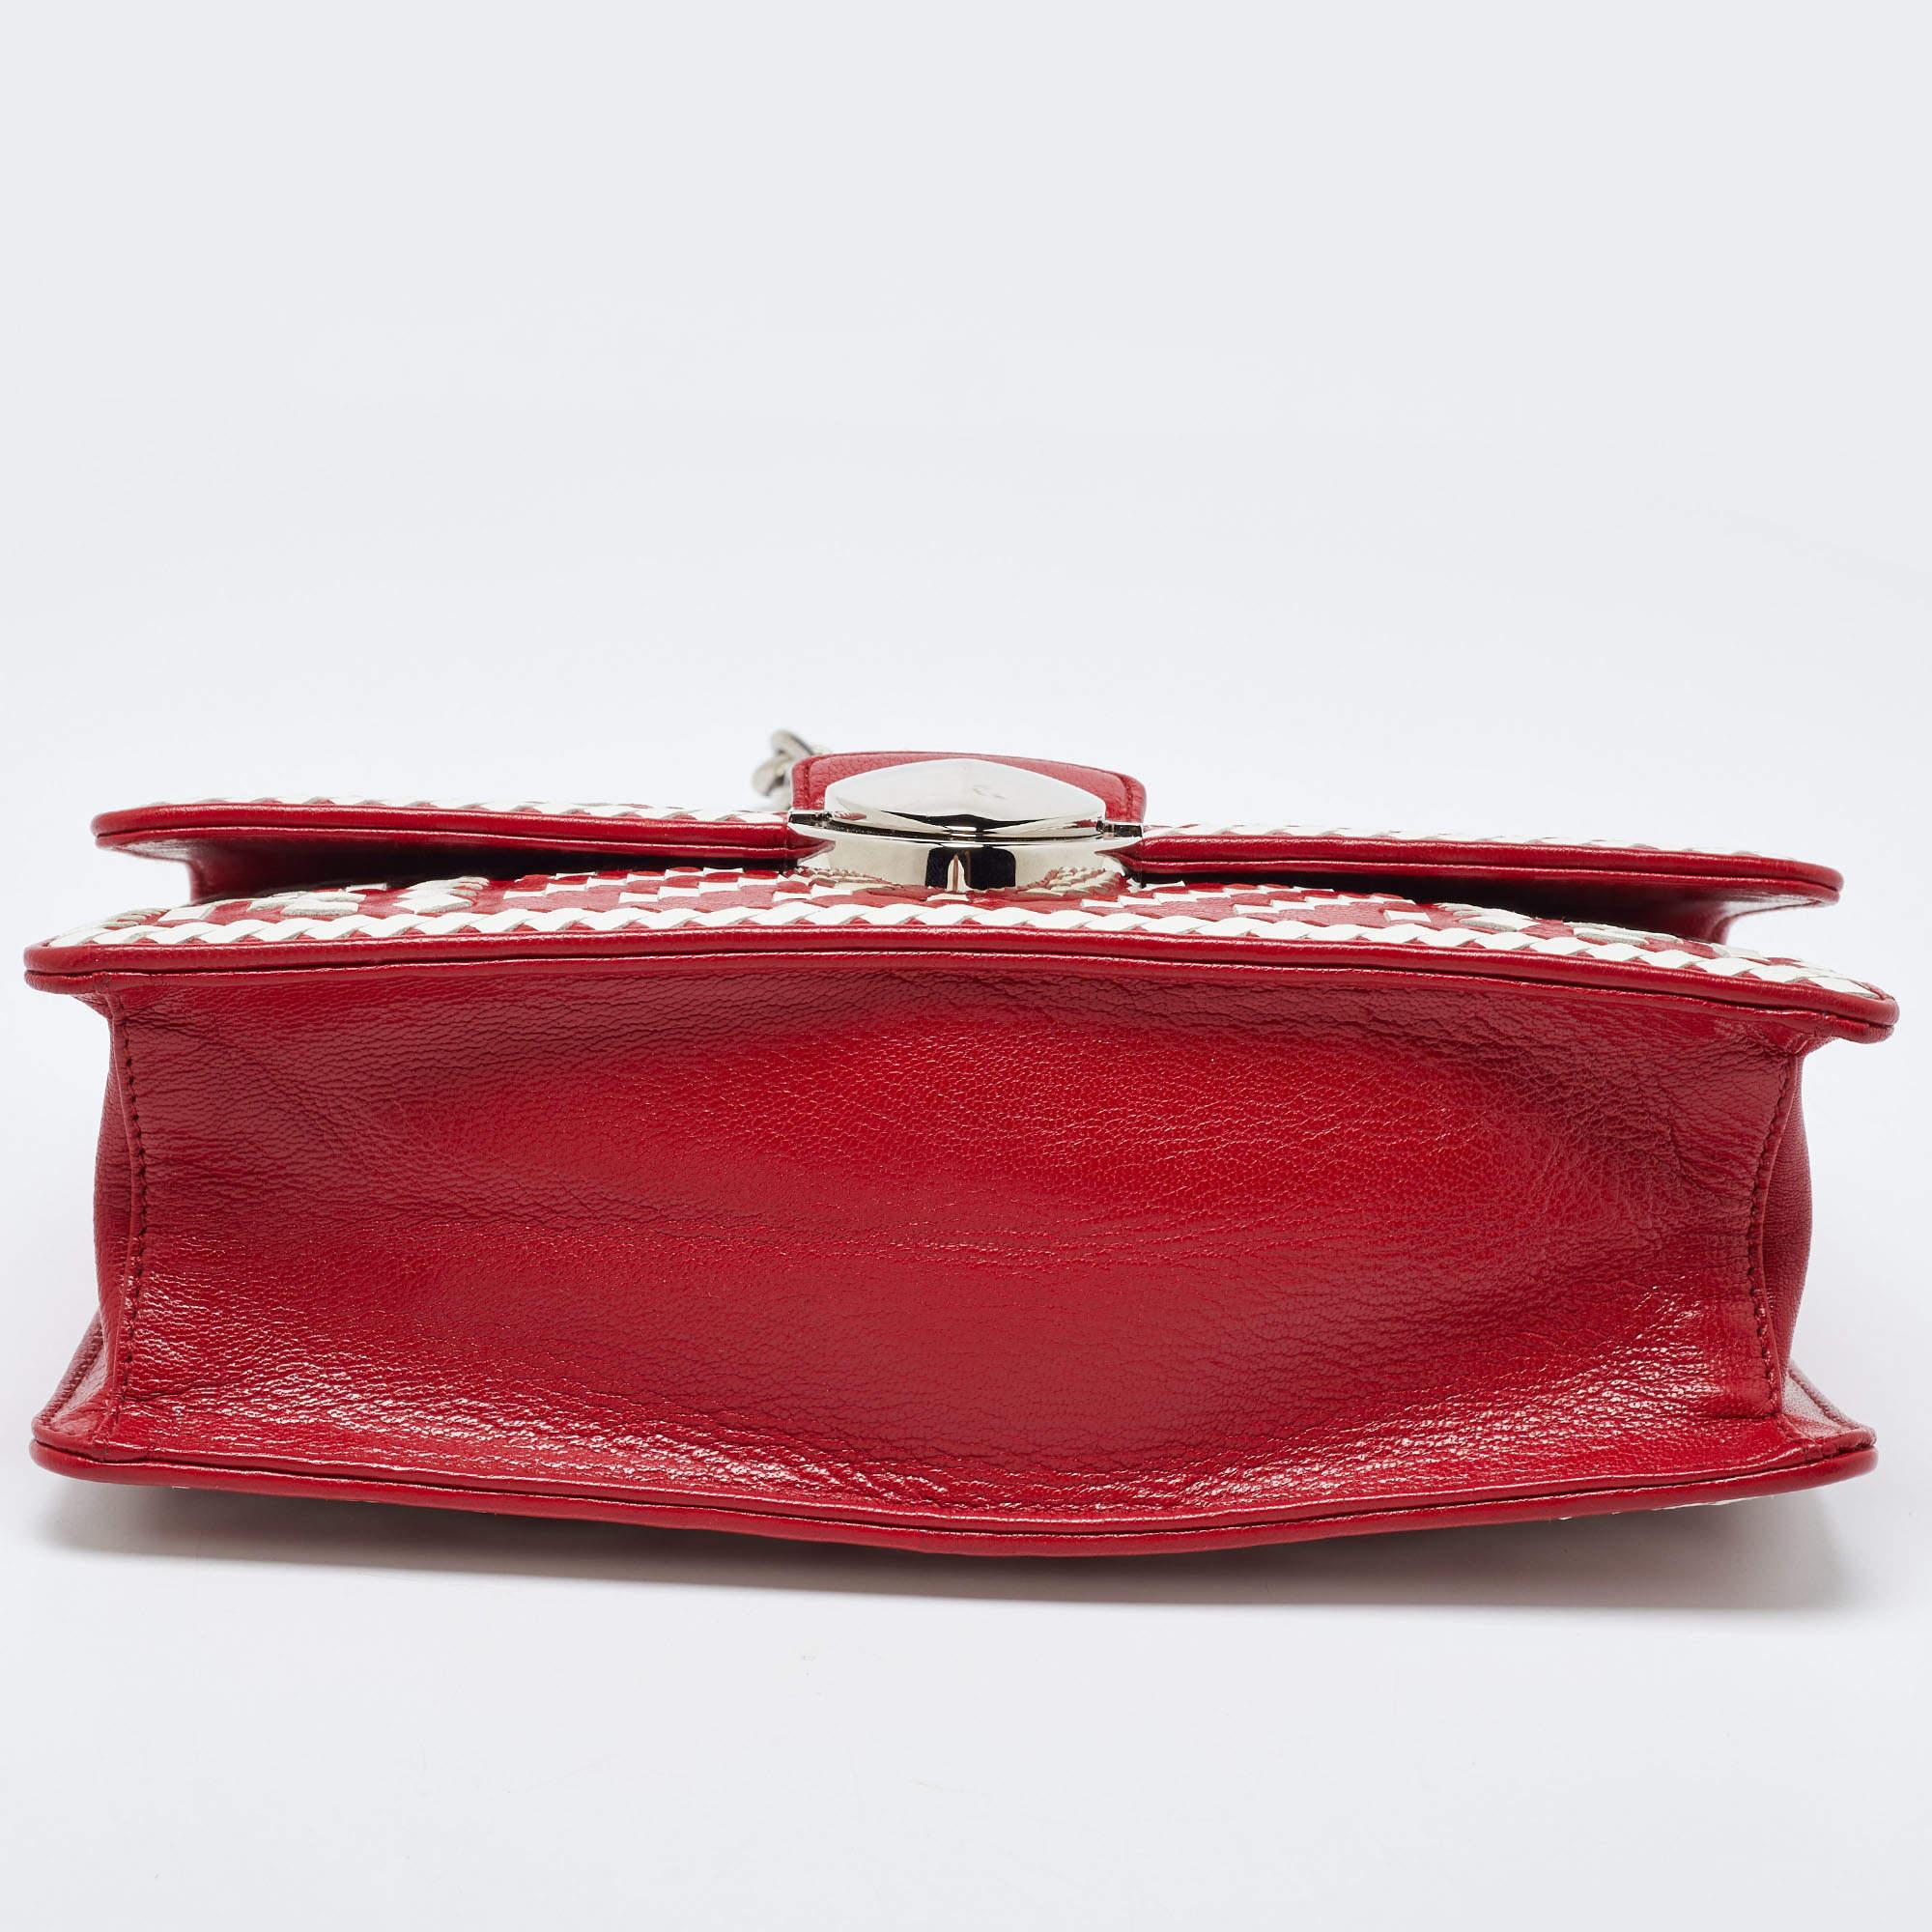 Prada Red/White Madras Woven Leather Pushlock Flap Bag 6